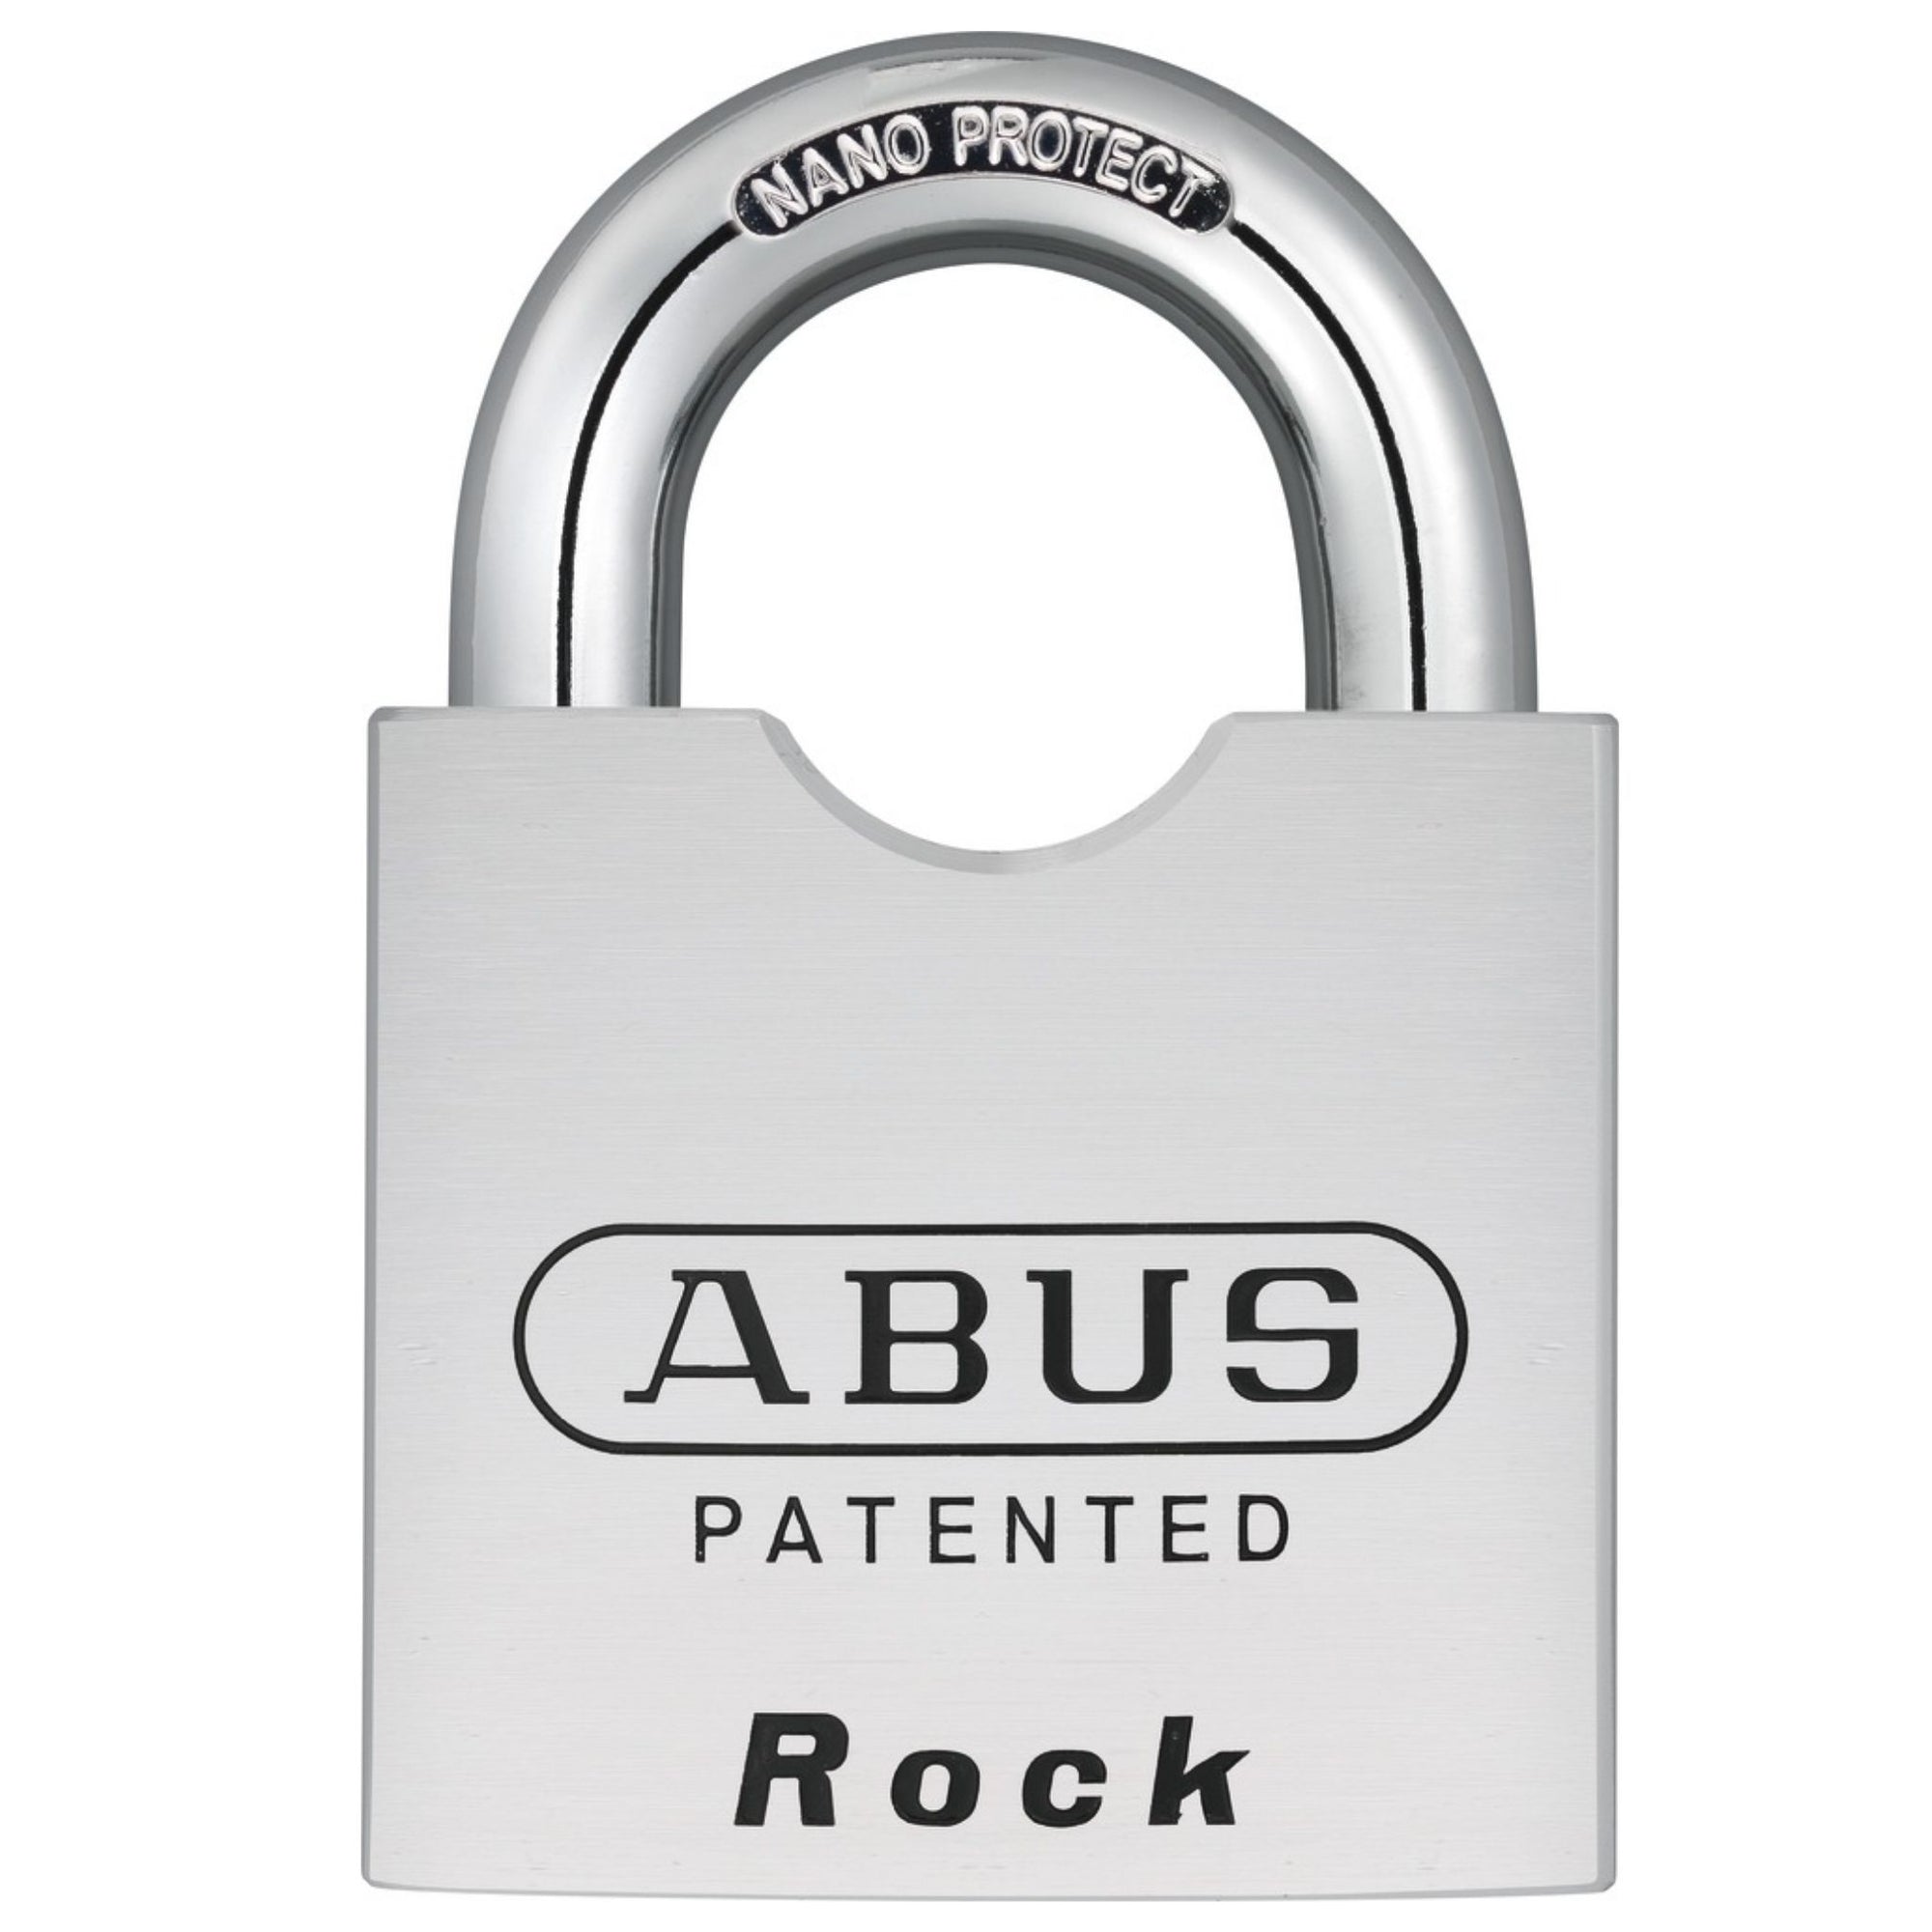 Abus 83/80 Rock Series Hardened Steel Padlocks Accept Many Popular OEM Keyway Cylinders - Level-10 Security! - The Lock Source